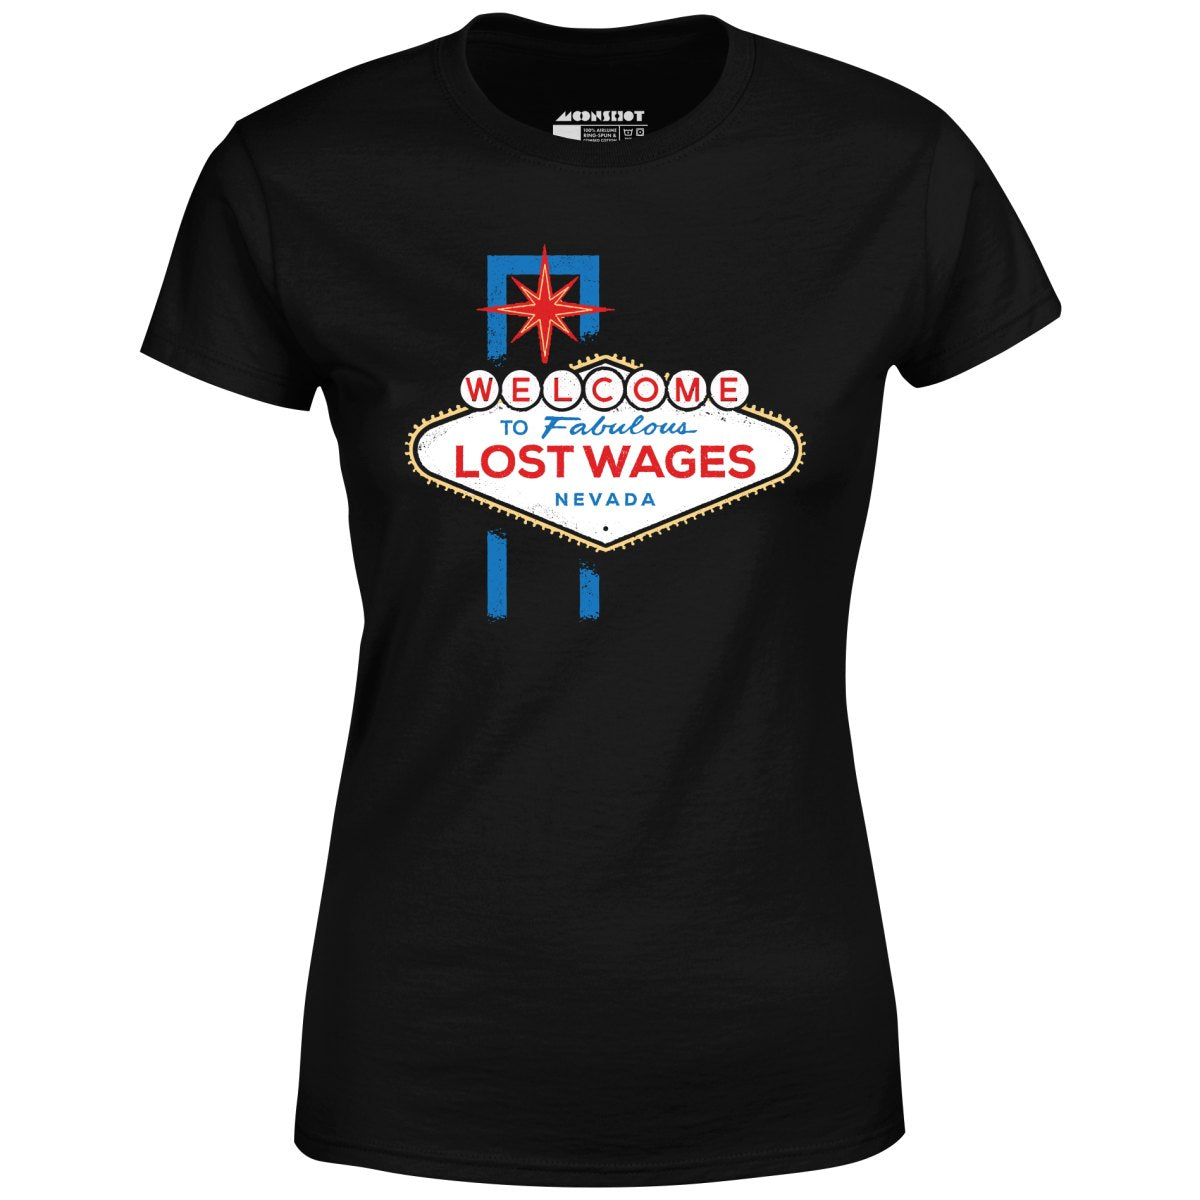 Lost Wages - Las Vegas - Women's T-Shirt